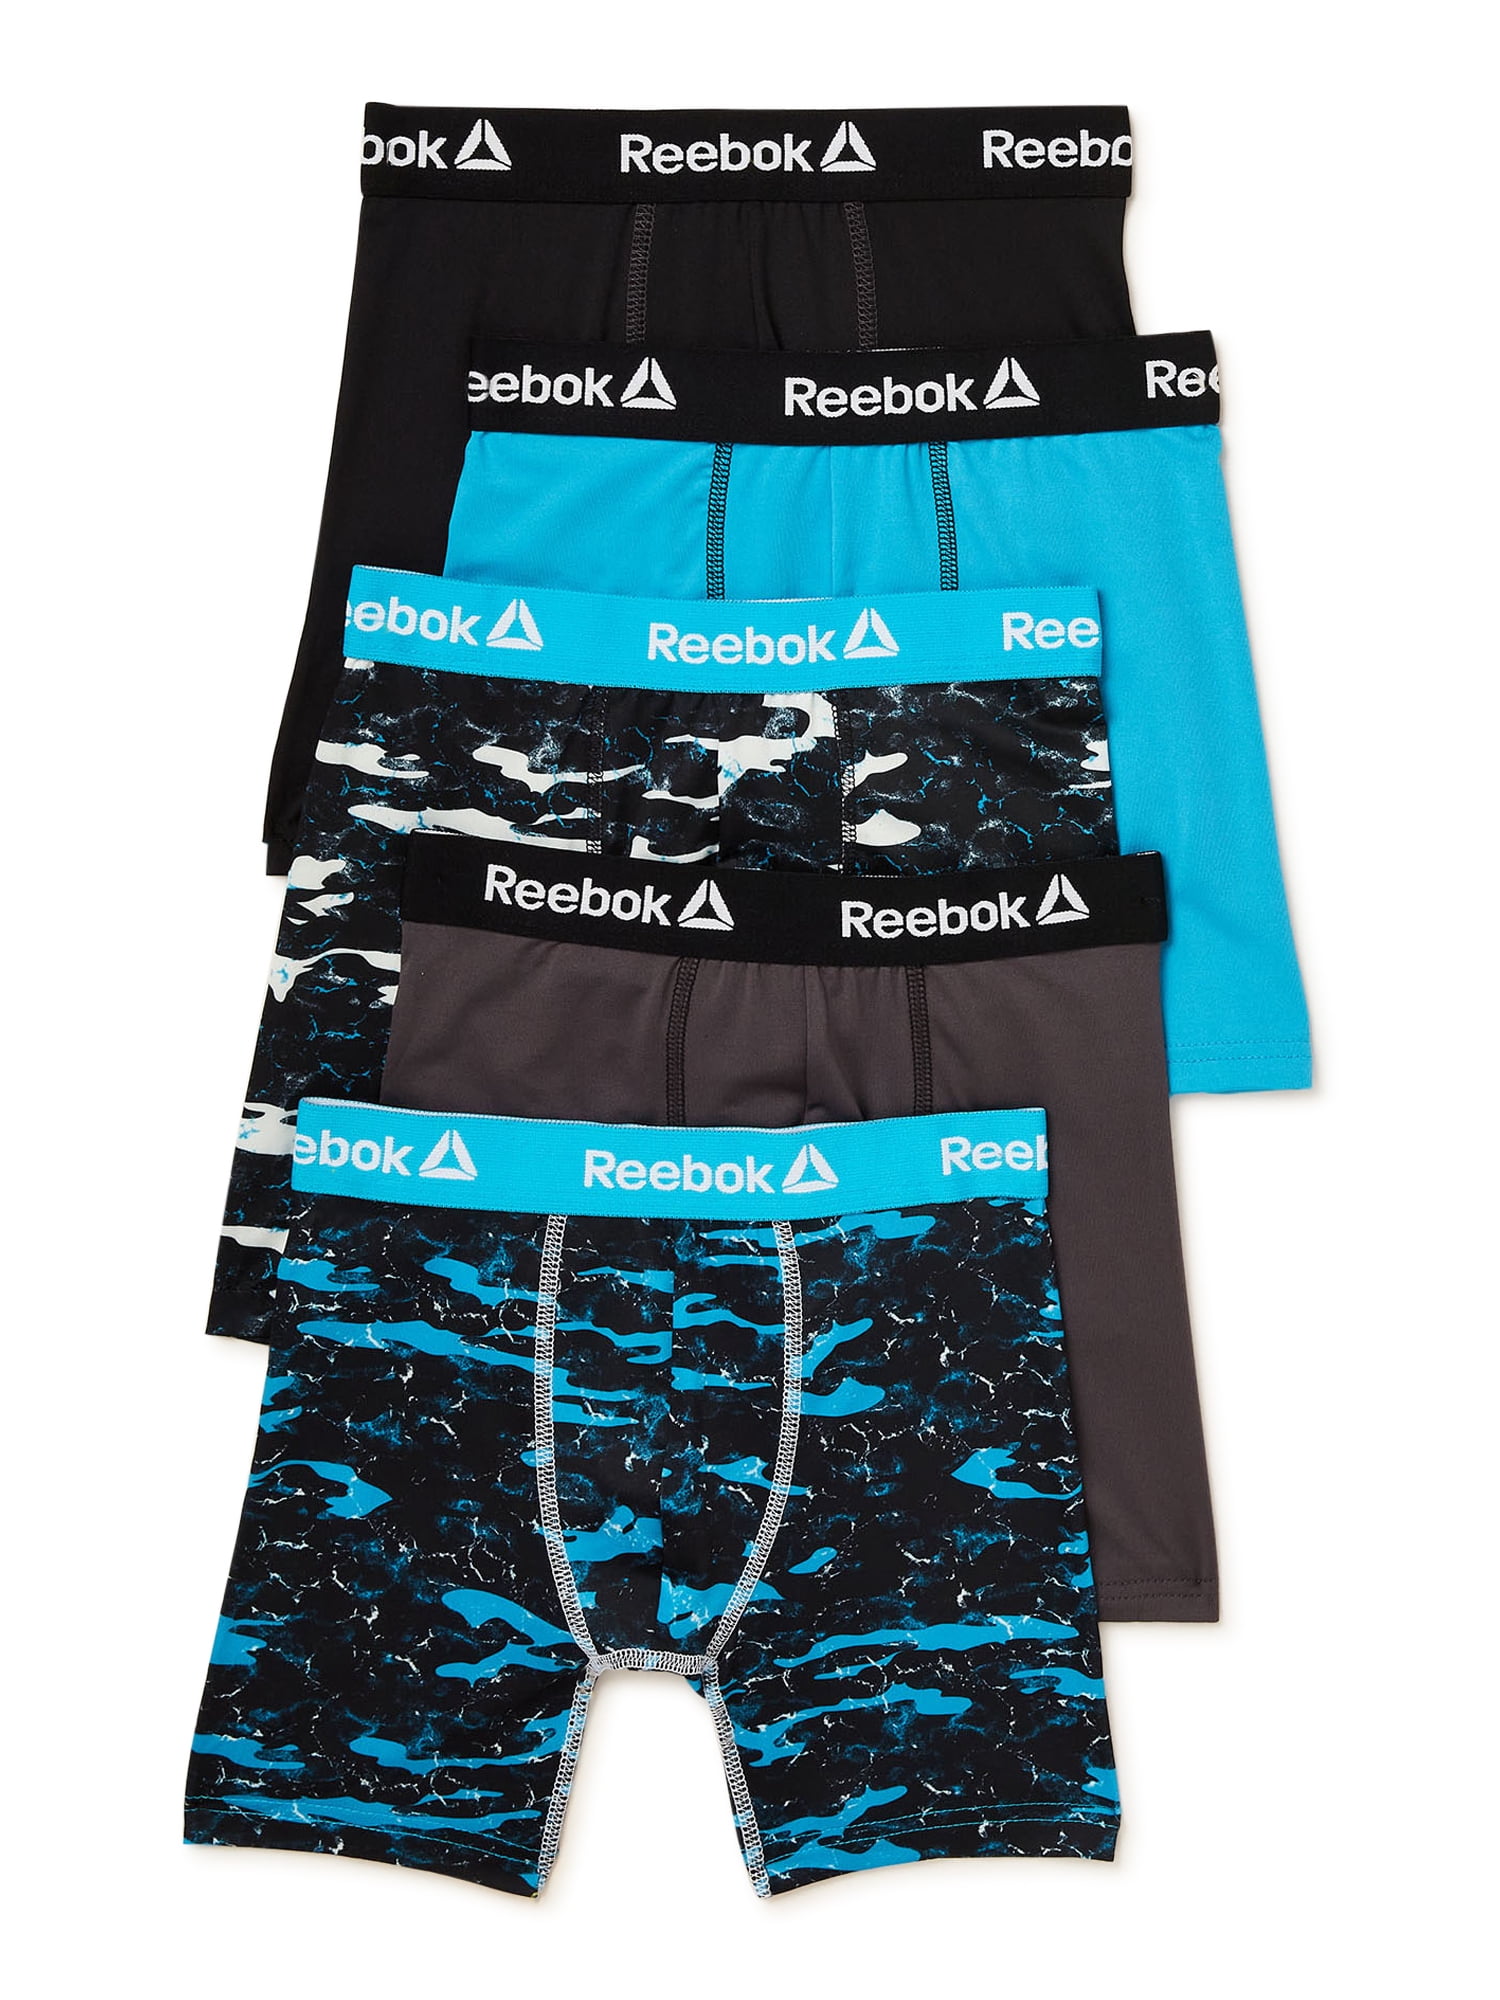 Reebok Boys' Performance Boxer Briefs, 5 Pack, Sizes S-XL